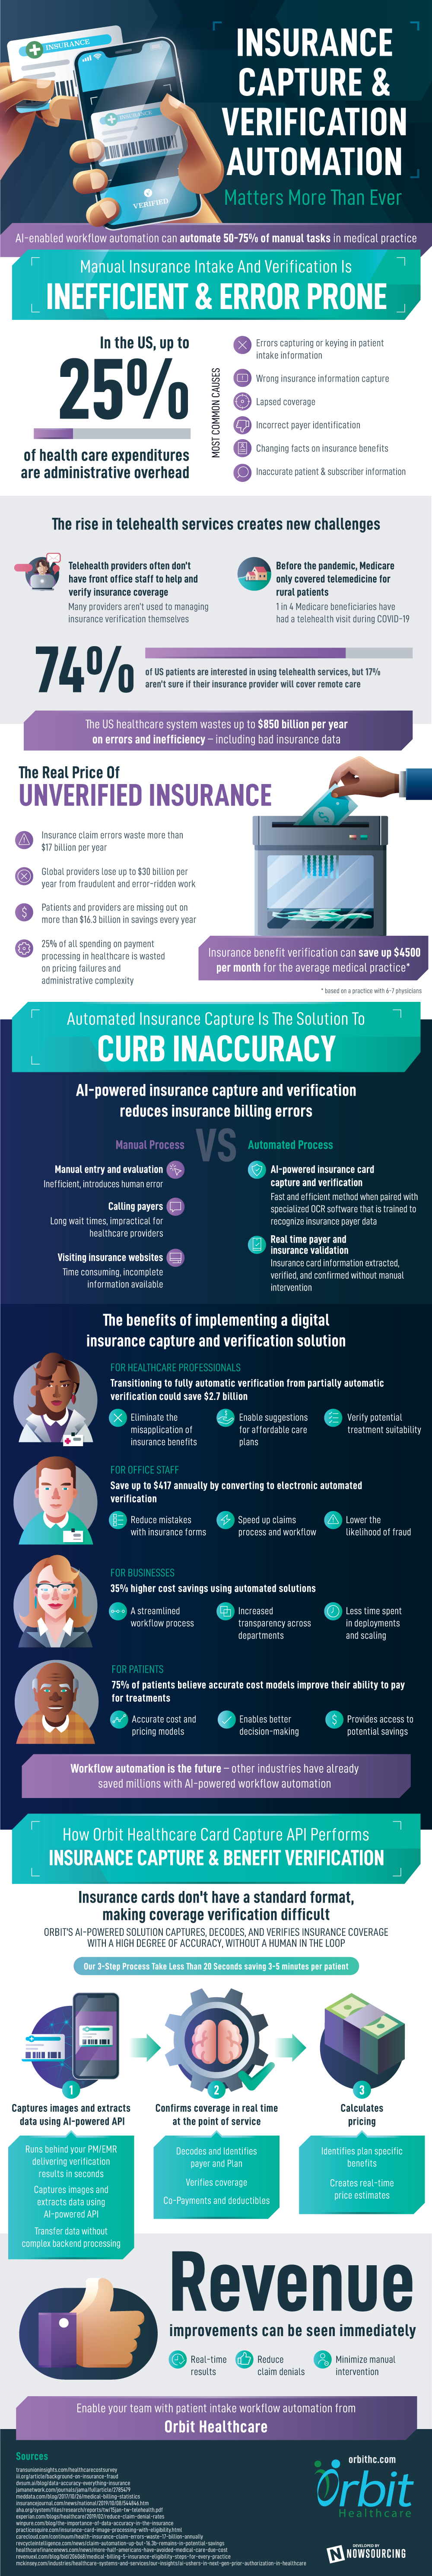 Insurance Capture & Verification Automation Matters More Than Ever